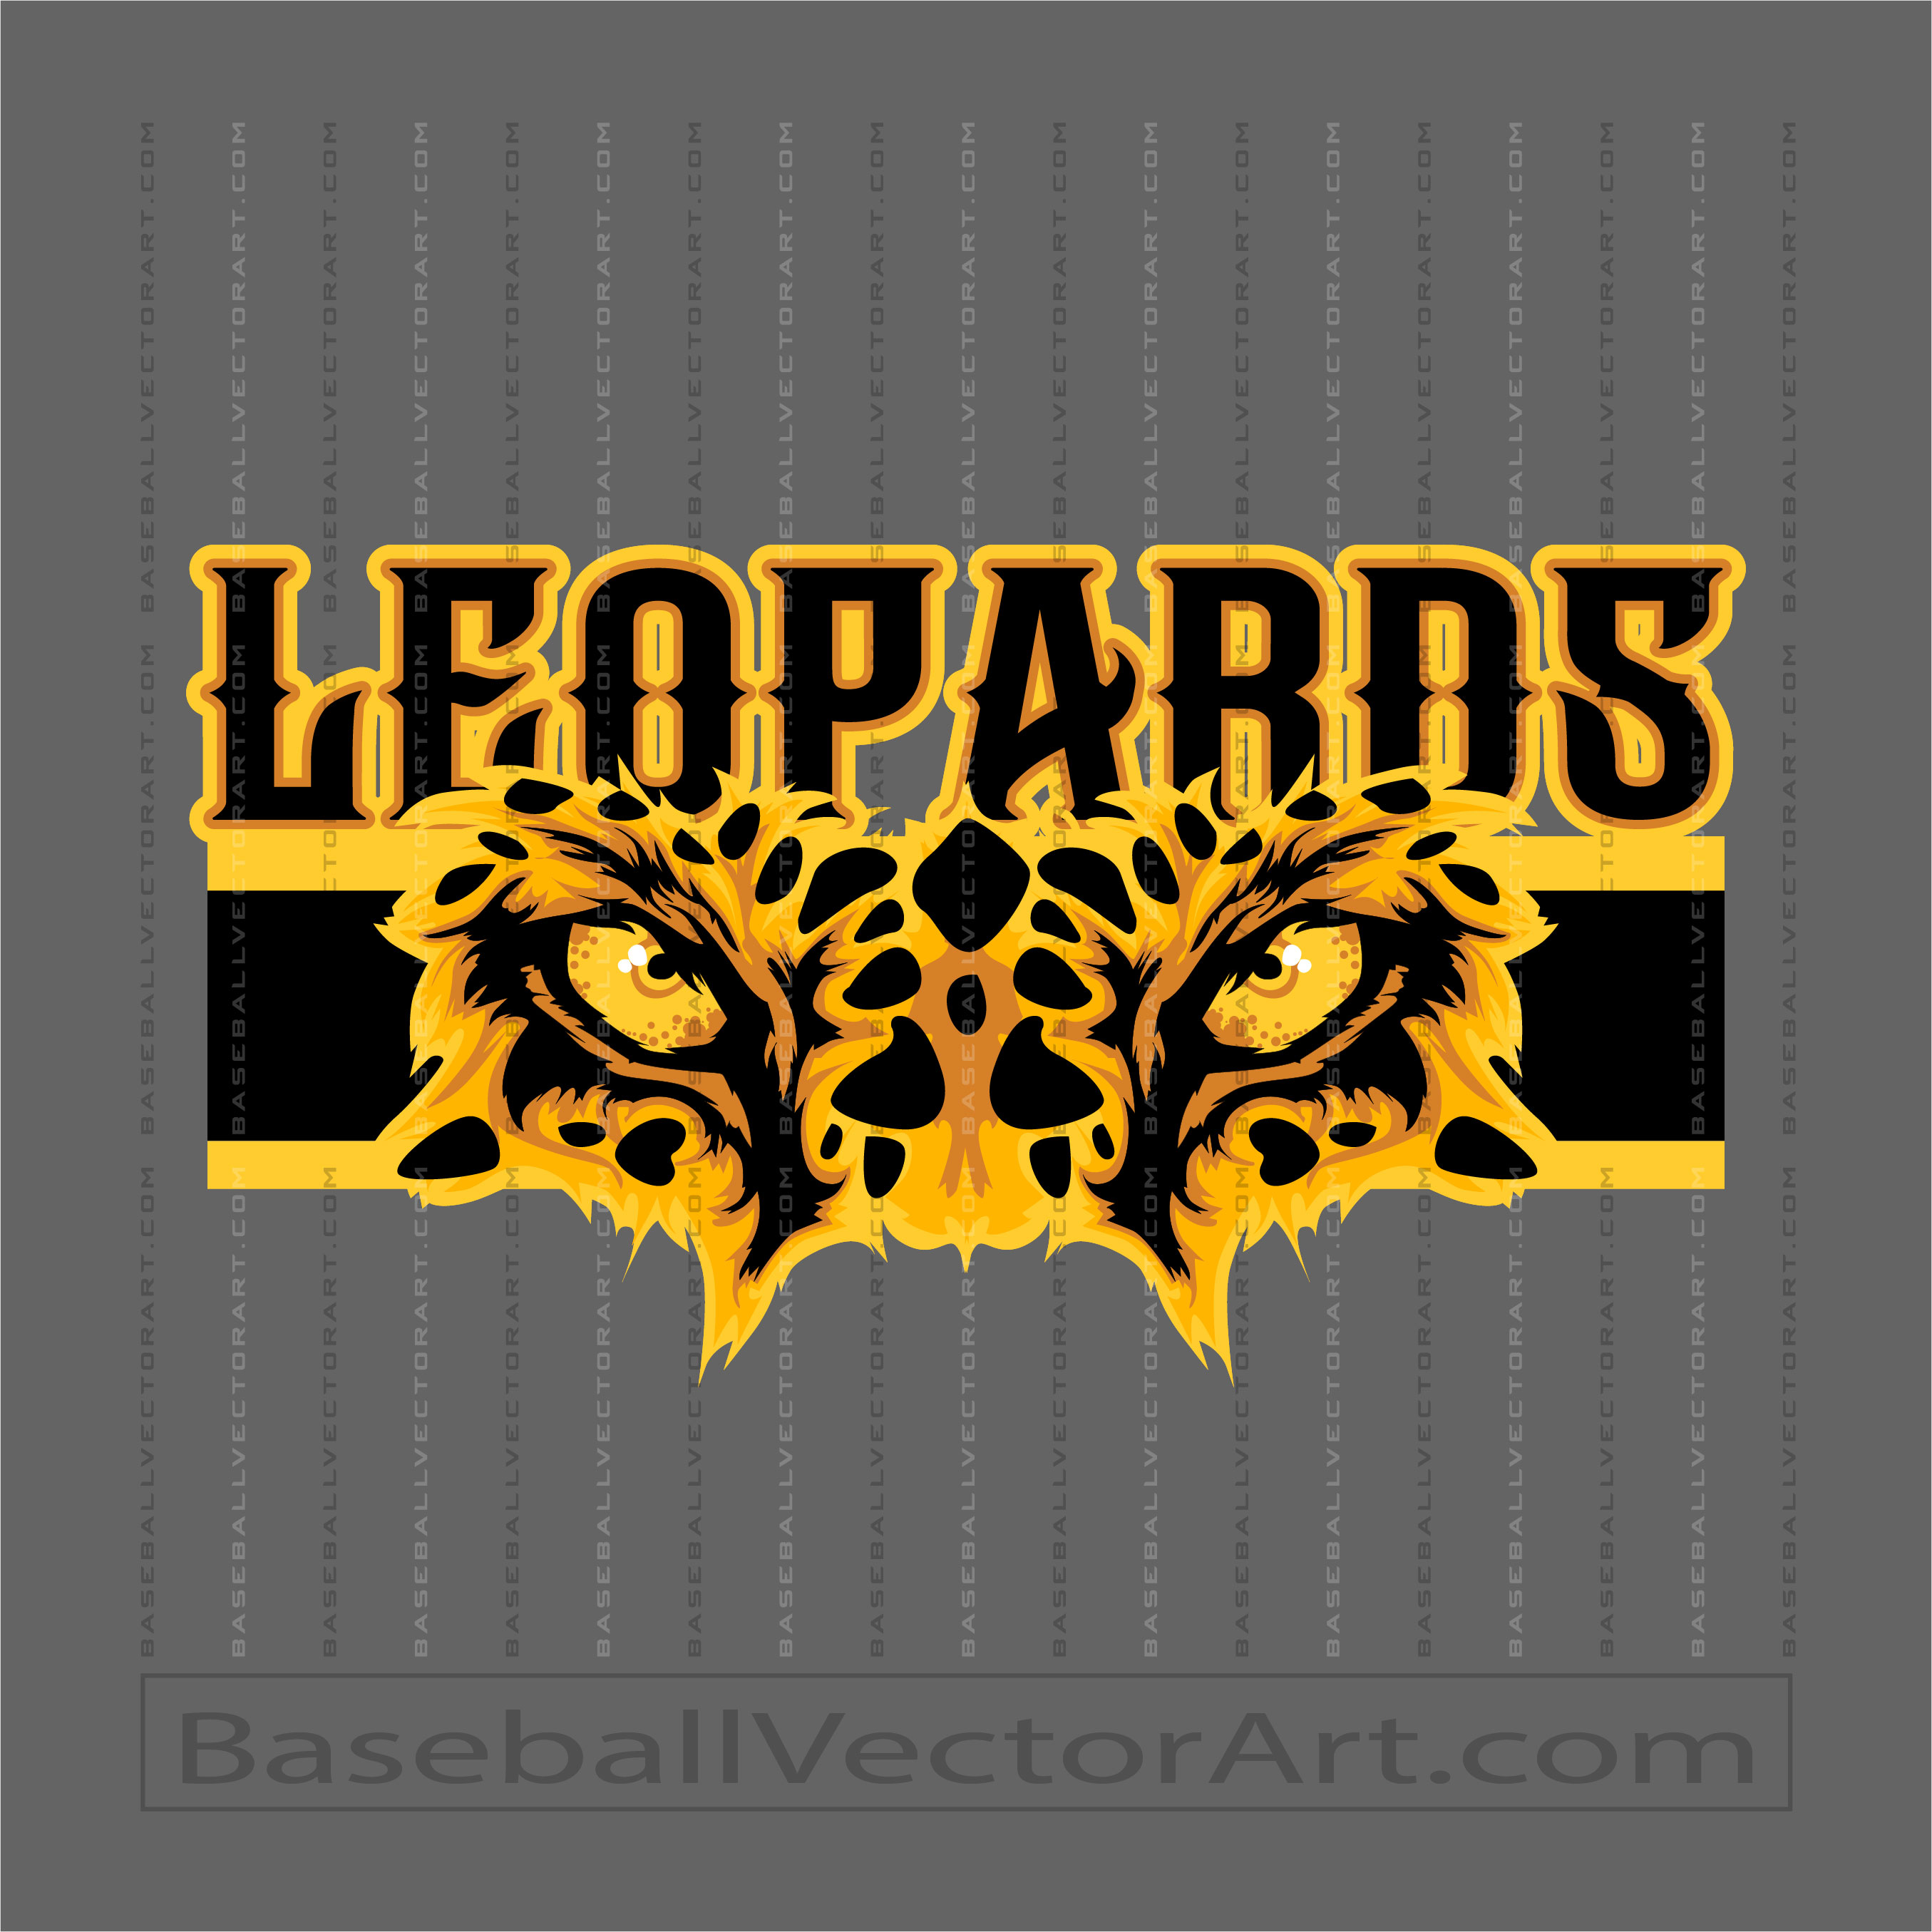 Leopards Baseball Team Logo